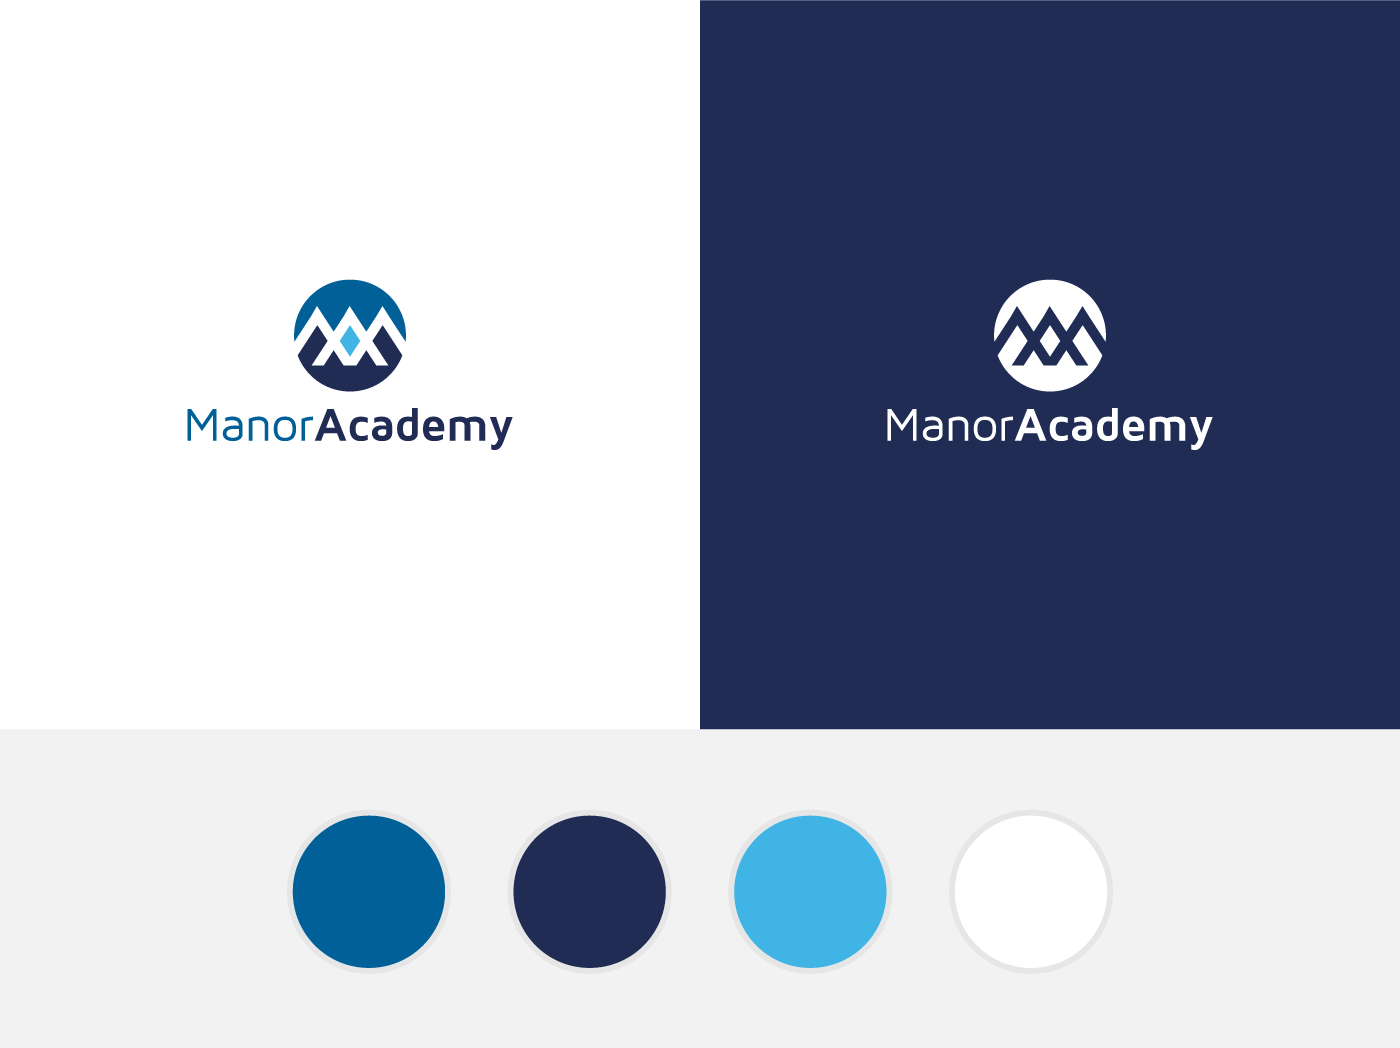 Manor Acdemy Logo Design And Brand Colour Scheme